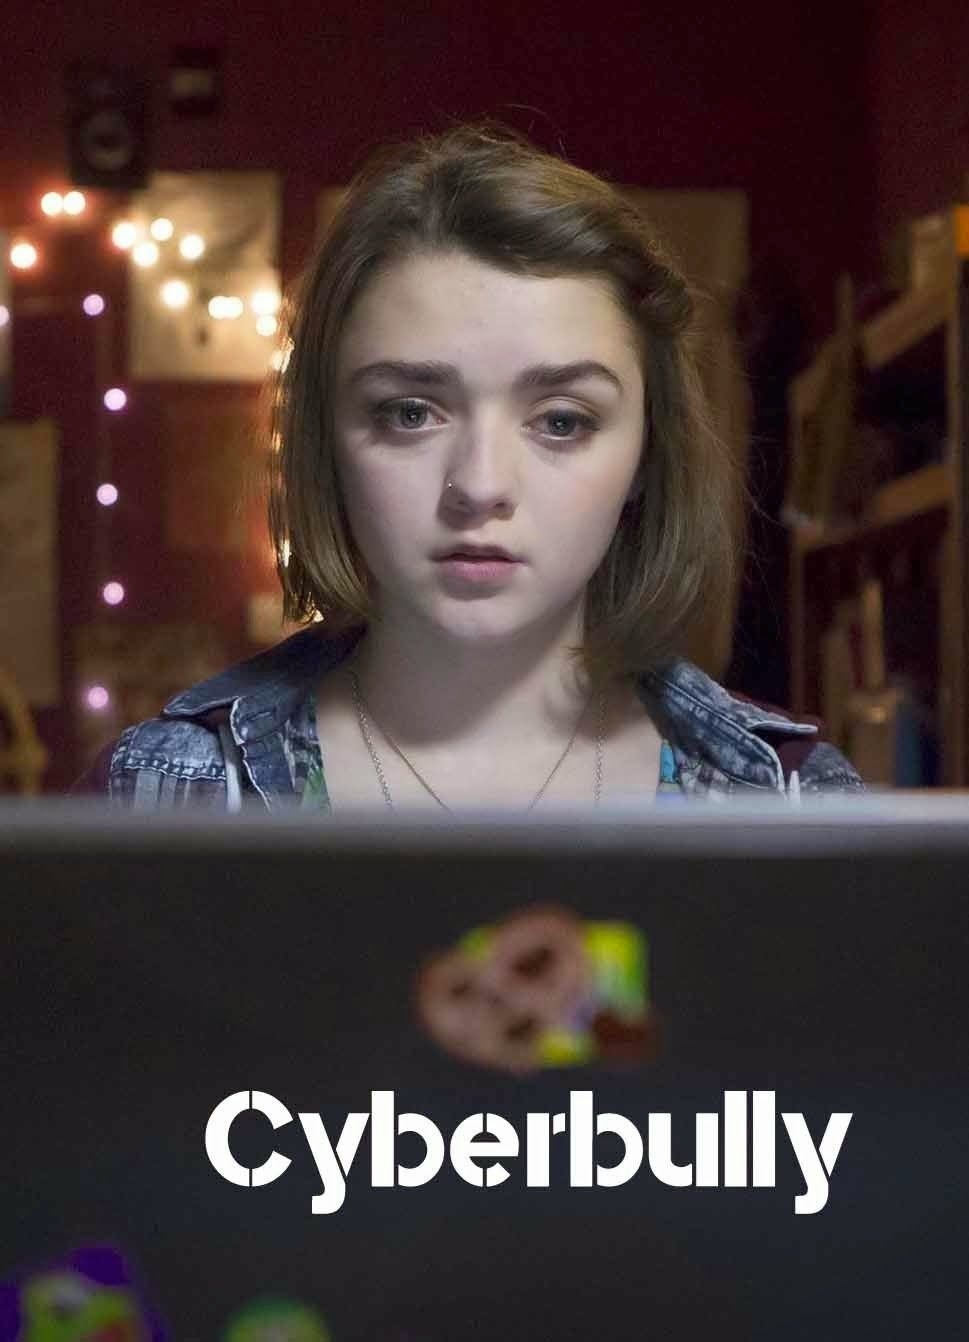 2015-Cyberbully-Posters-002.jpg